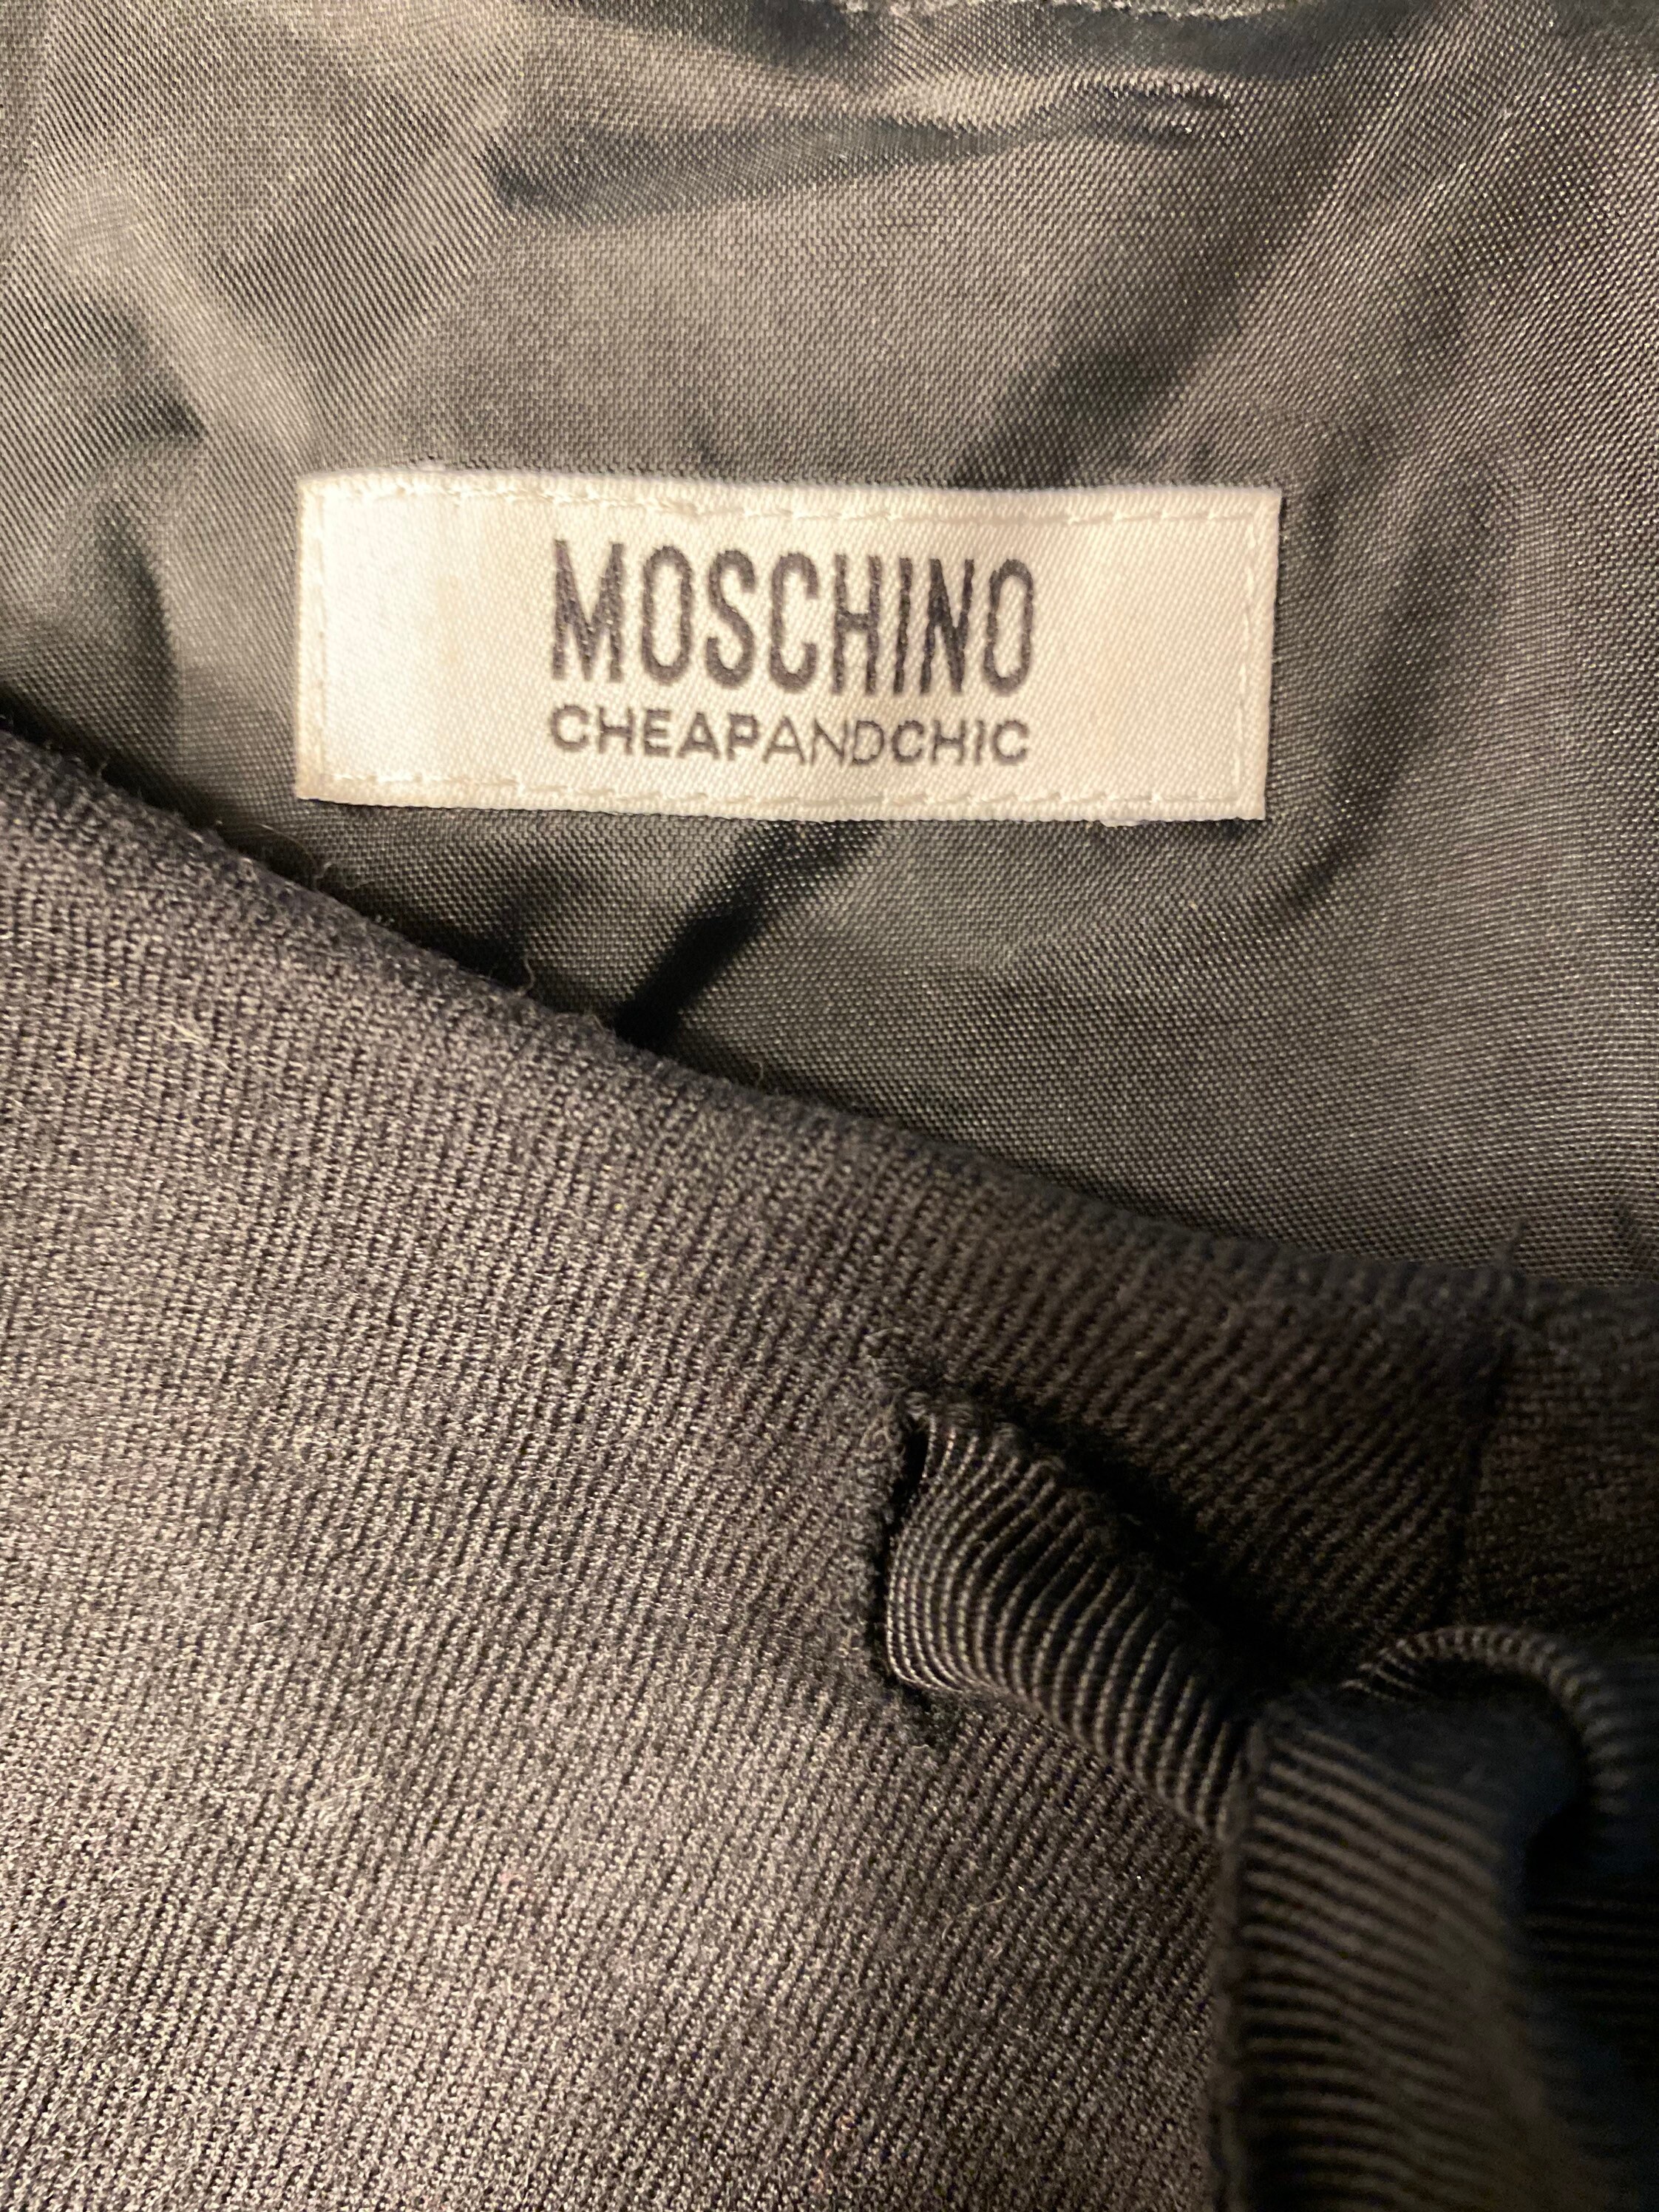 Moschino Cheap & Chic Retro Black Wool Lined LBD Sheath US 12 - Etsy